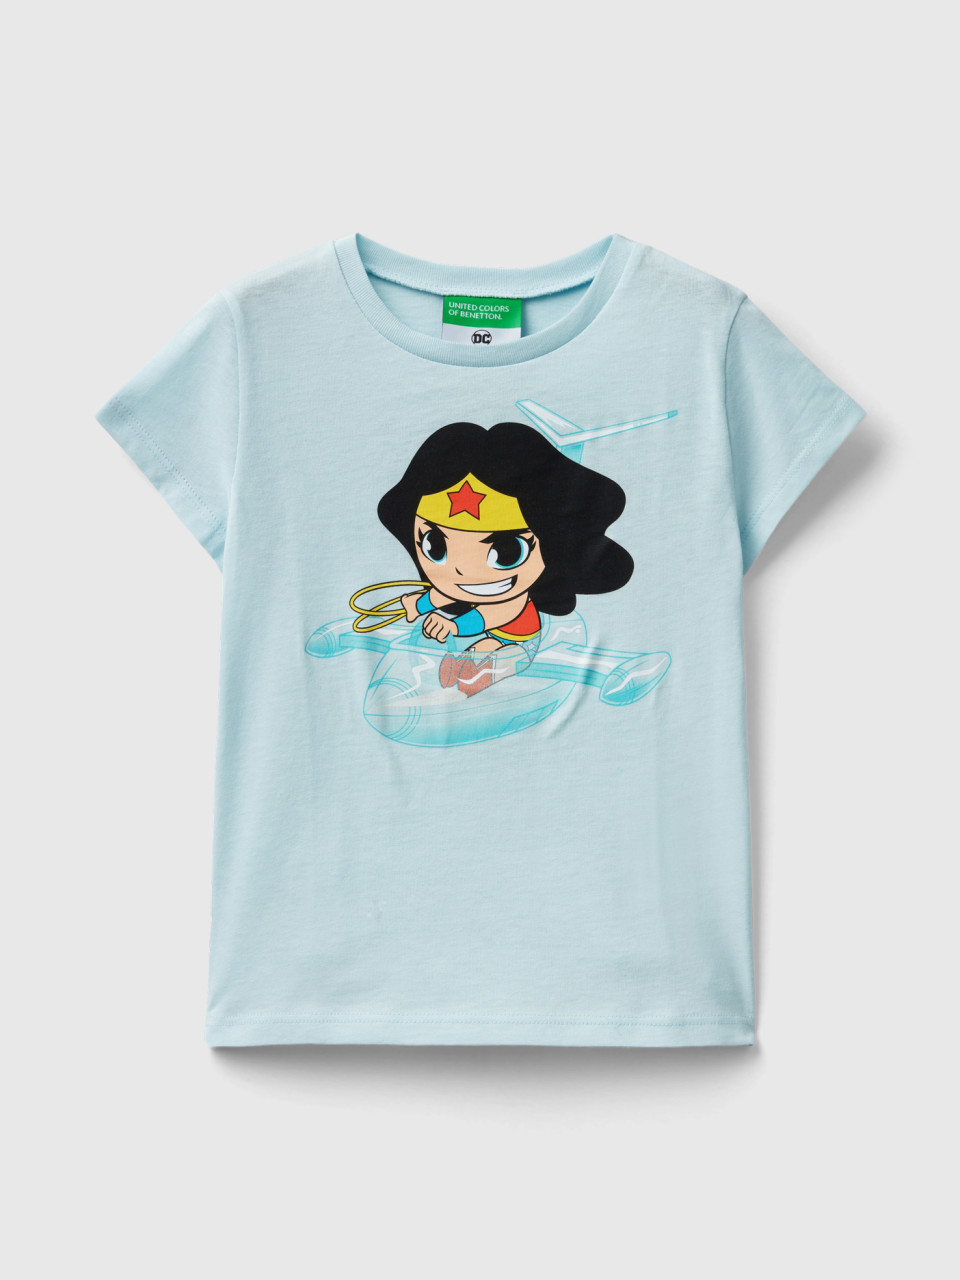 Benetton, Wonder Woman ©&™ Dc Comics T-shirt, Aqua, Kids